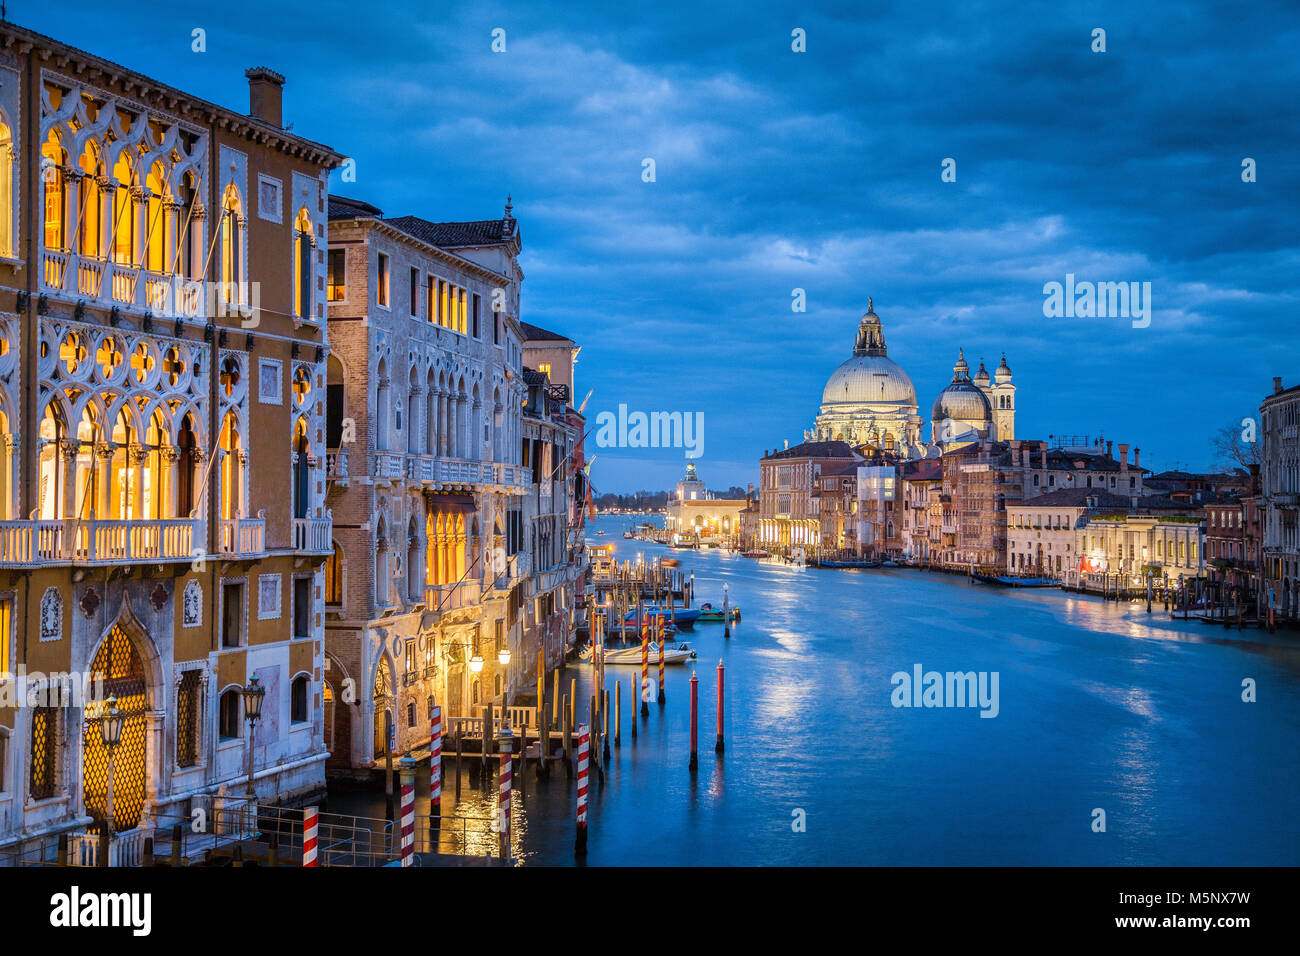 Classic view of famous Canal Grande with historic Basilica di Santa Maria della Salute in the background in twilight, Venice, Italy Stock Photo